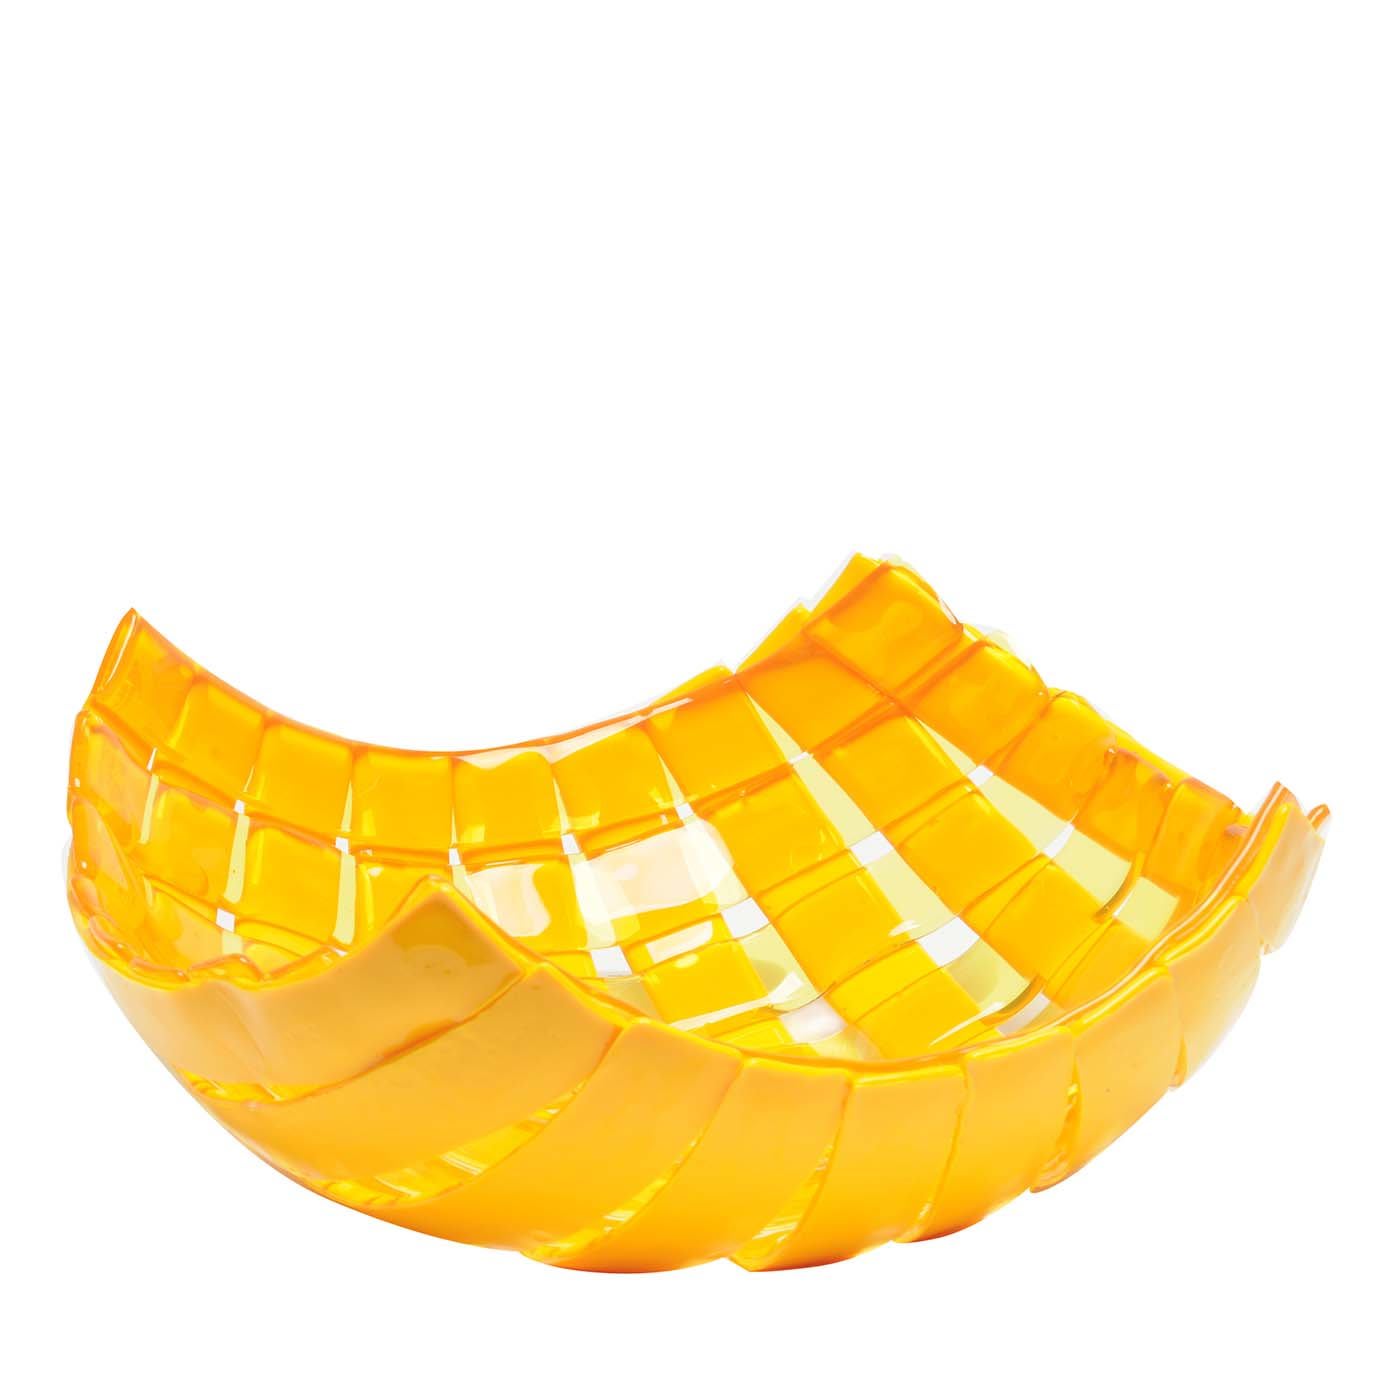 Net Basket Yellow Medium Centerpiece by Enzo Mari - Corsi Design Factory